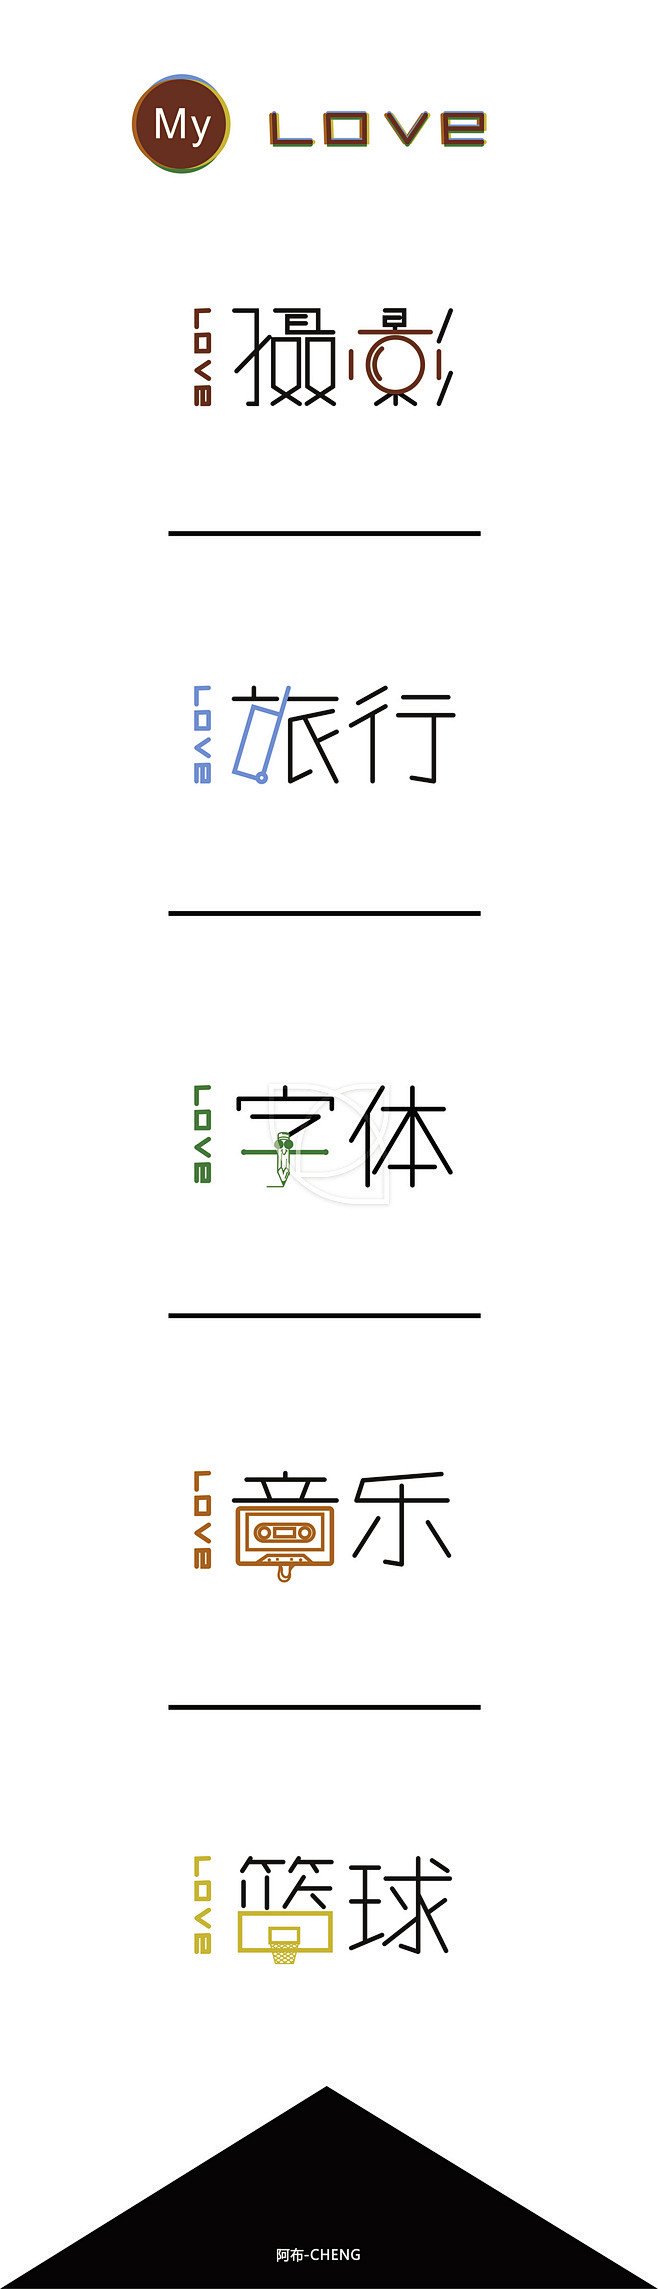 My love#字体设计# #Logo#